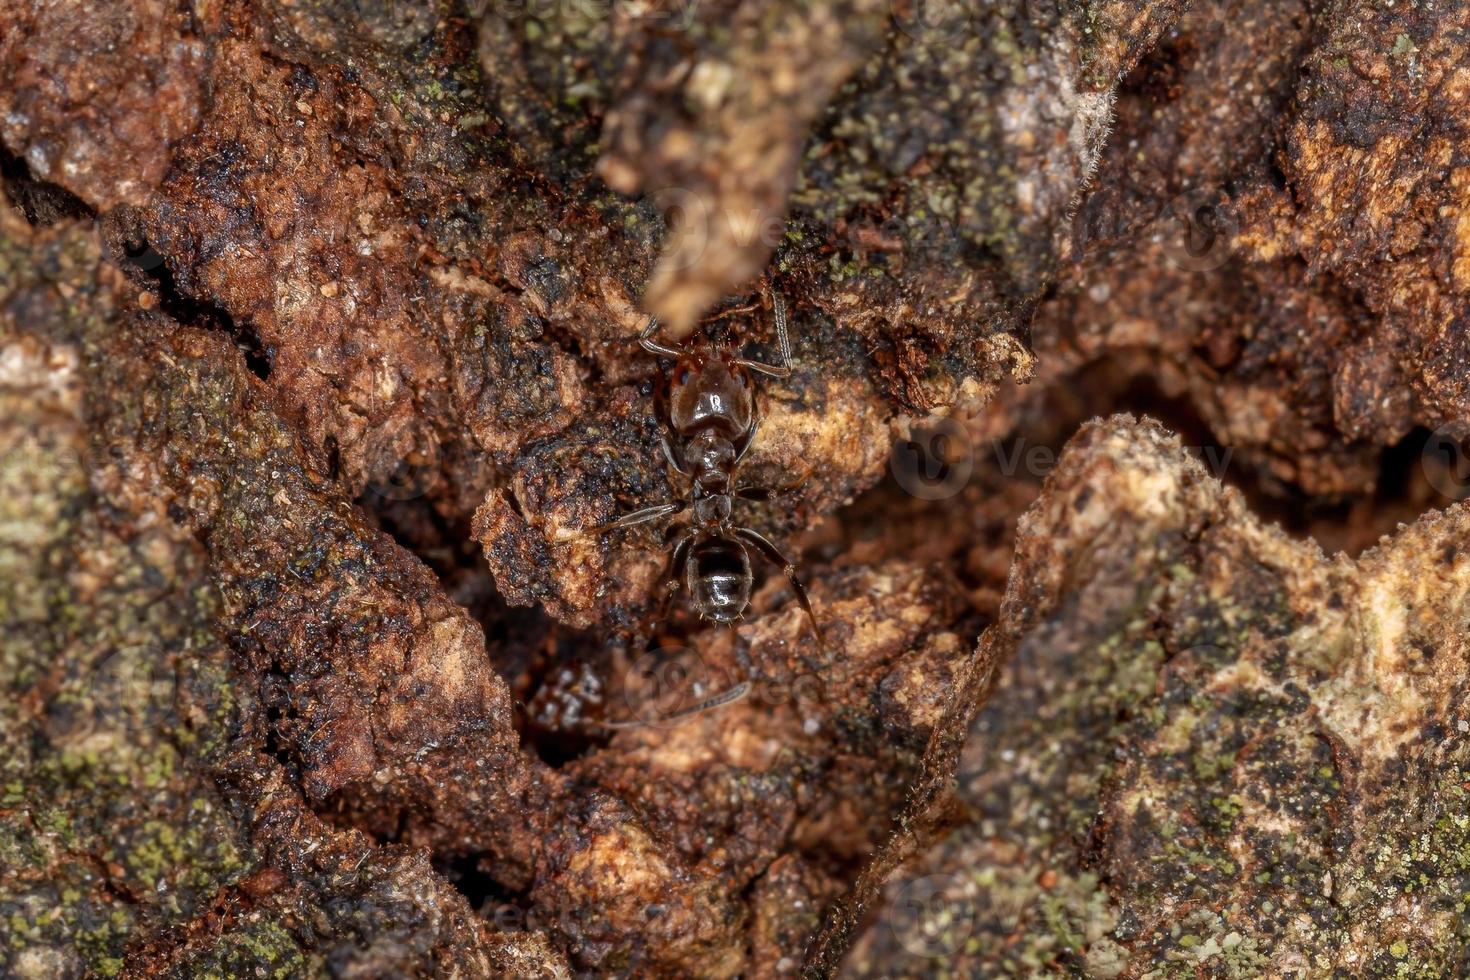 Adult Cecropia Ant photo